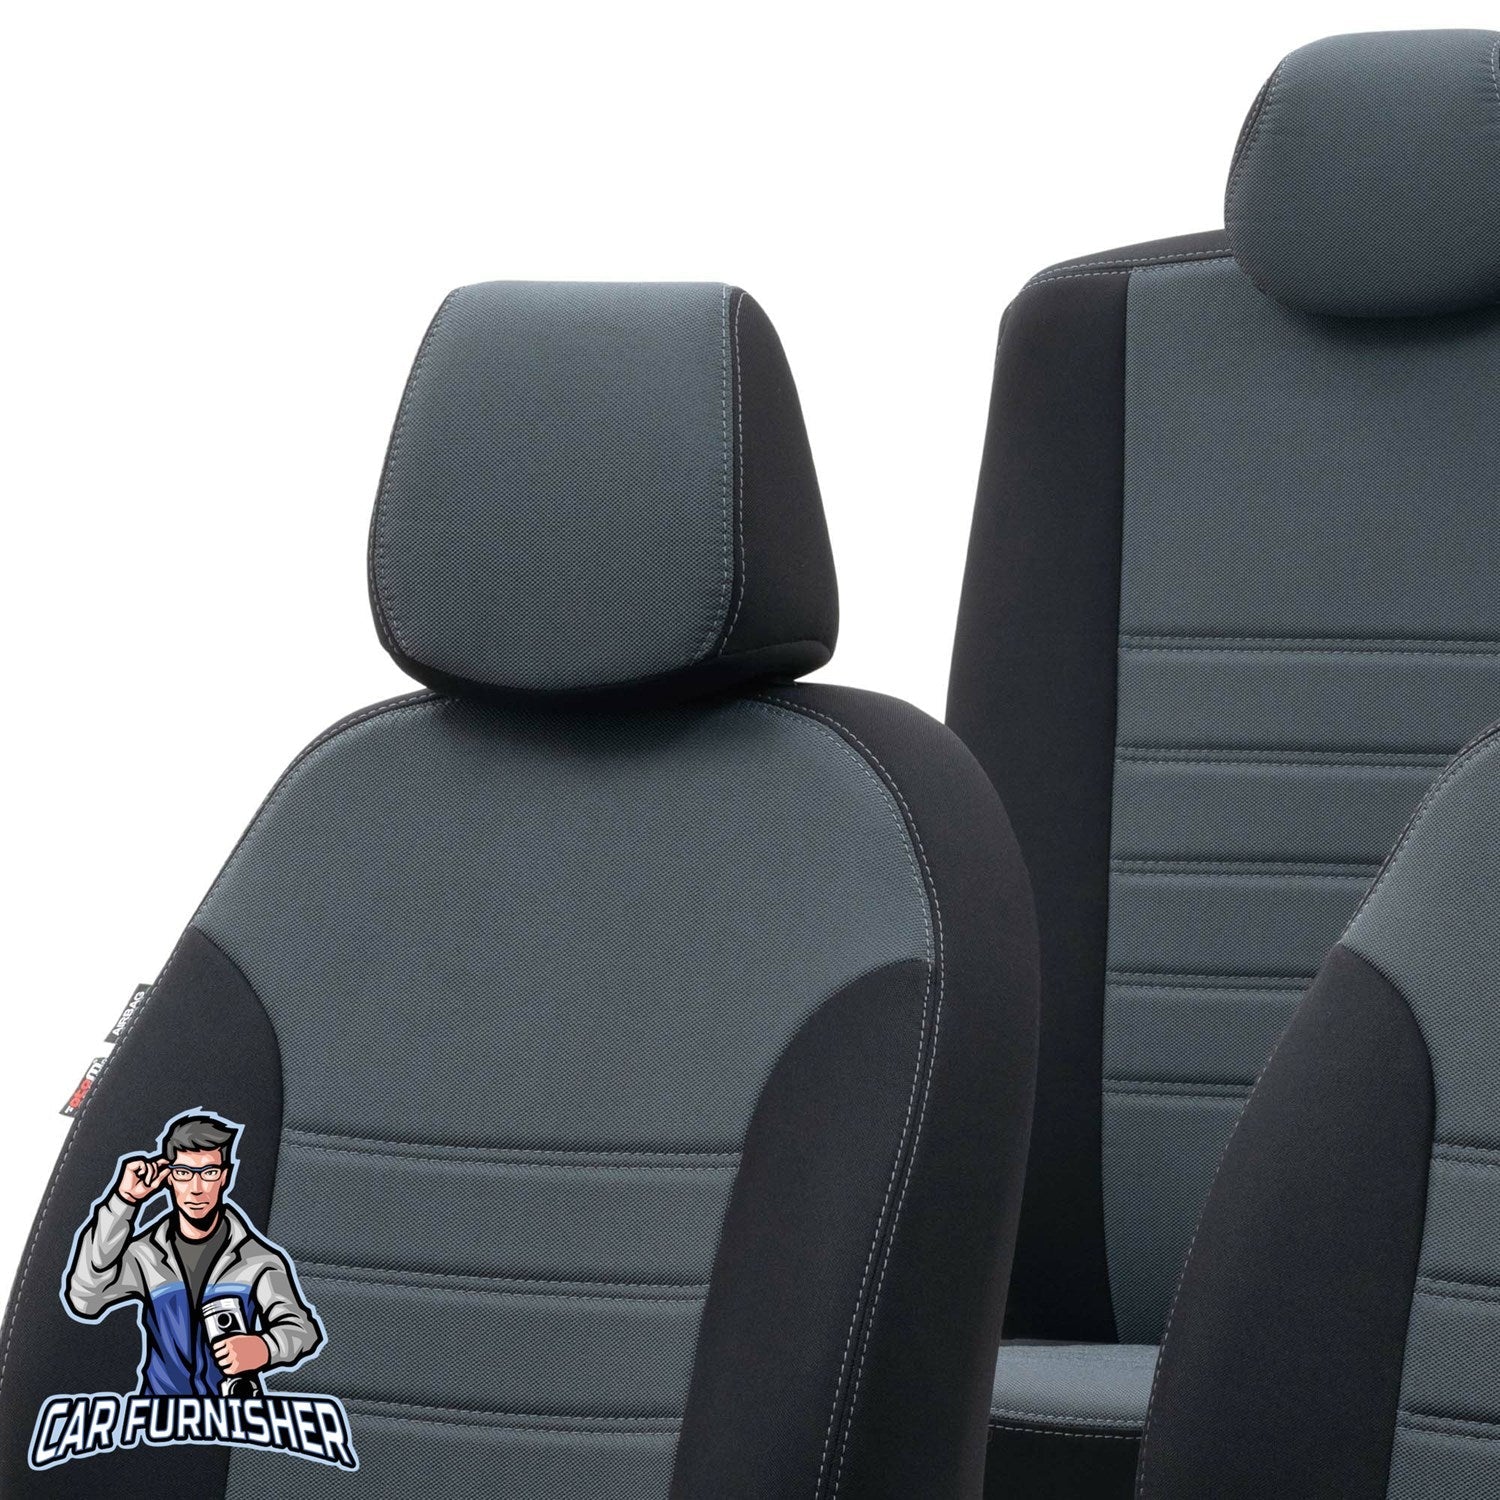 Toyota Hilux Seat Cover Original Jacquard Design Dark Beige Jacquard Fabric